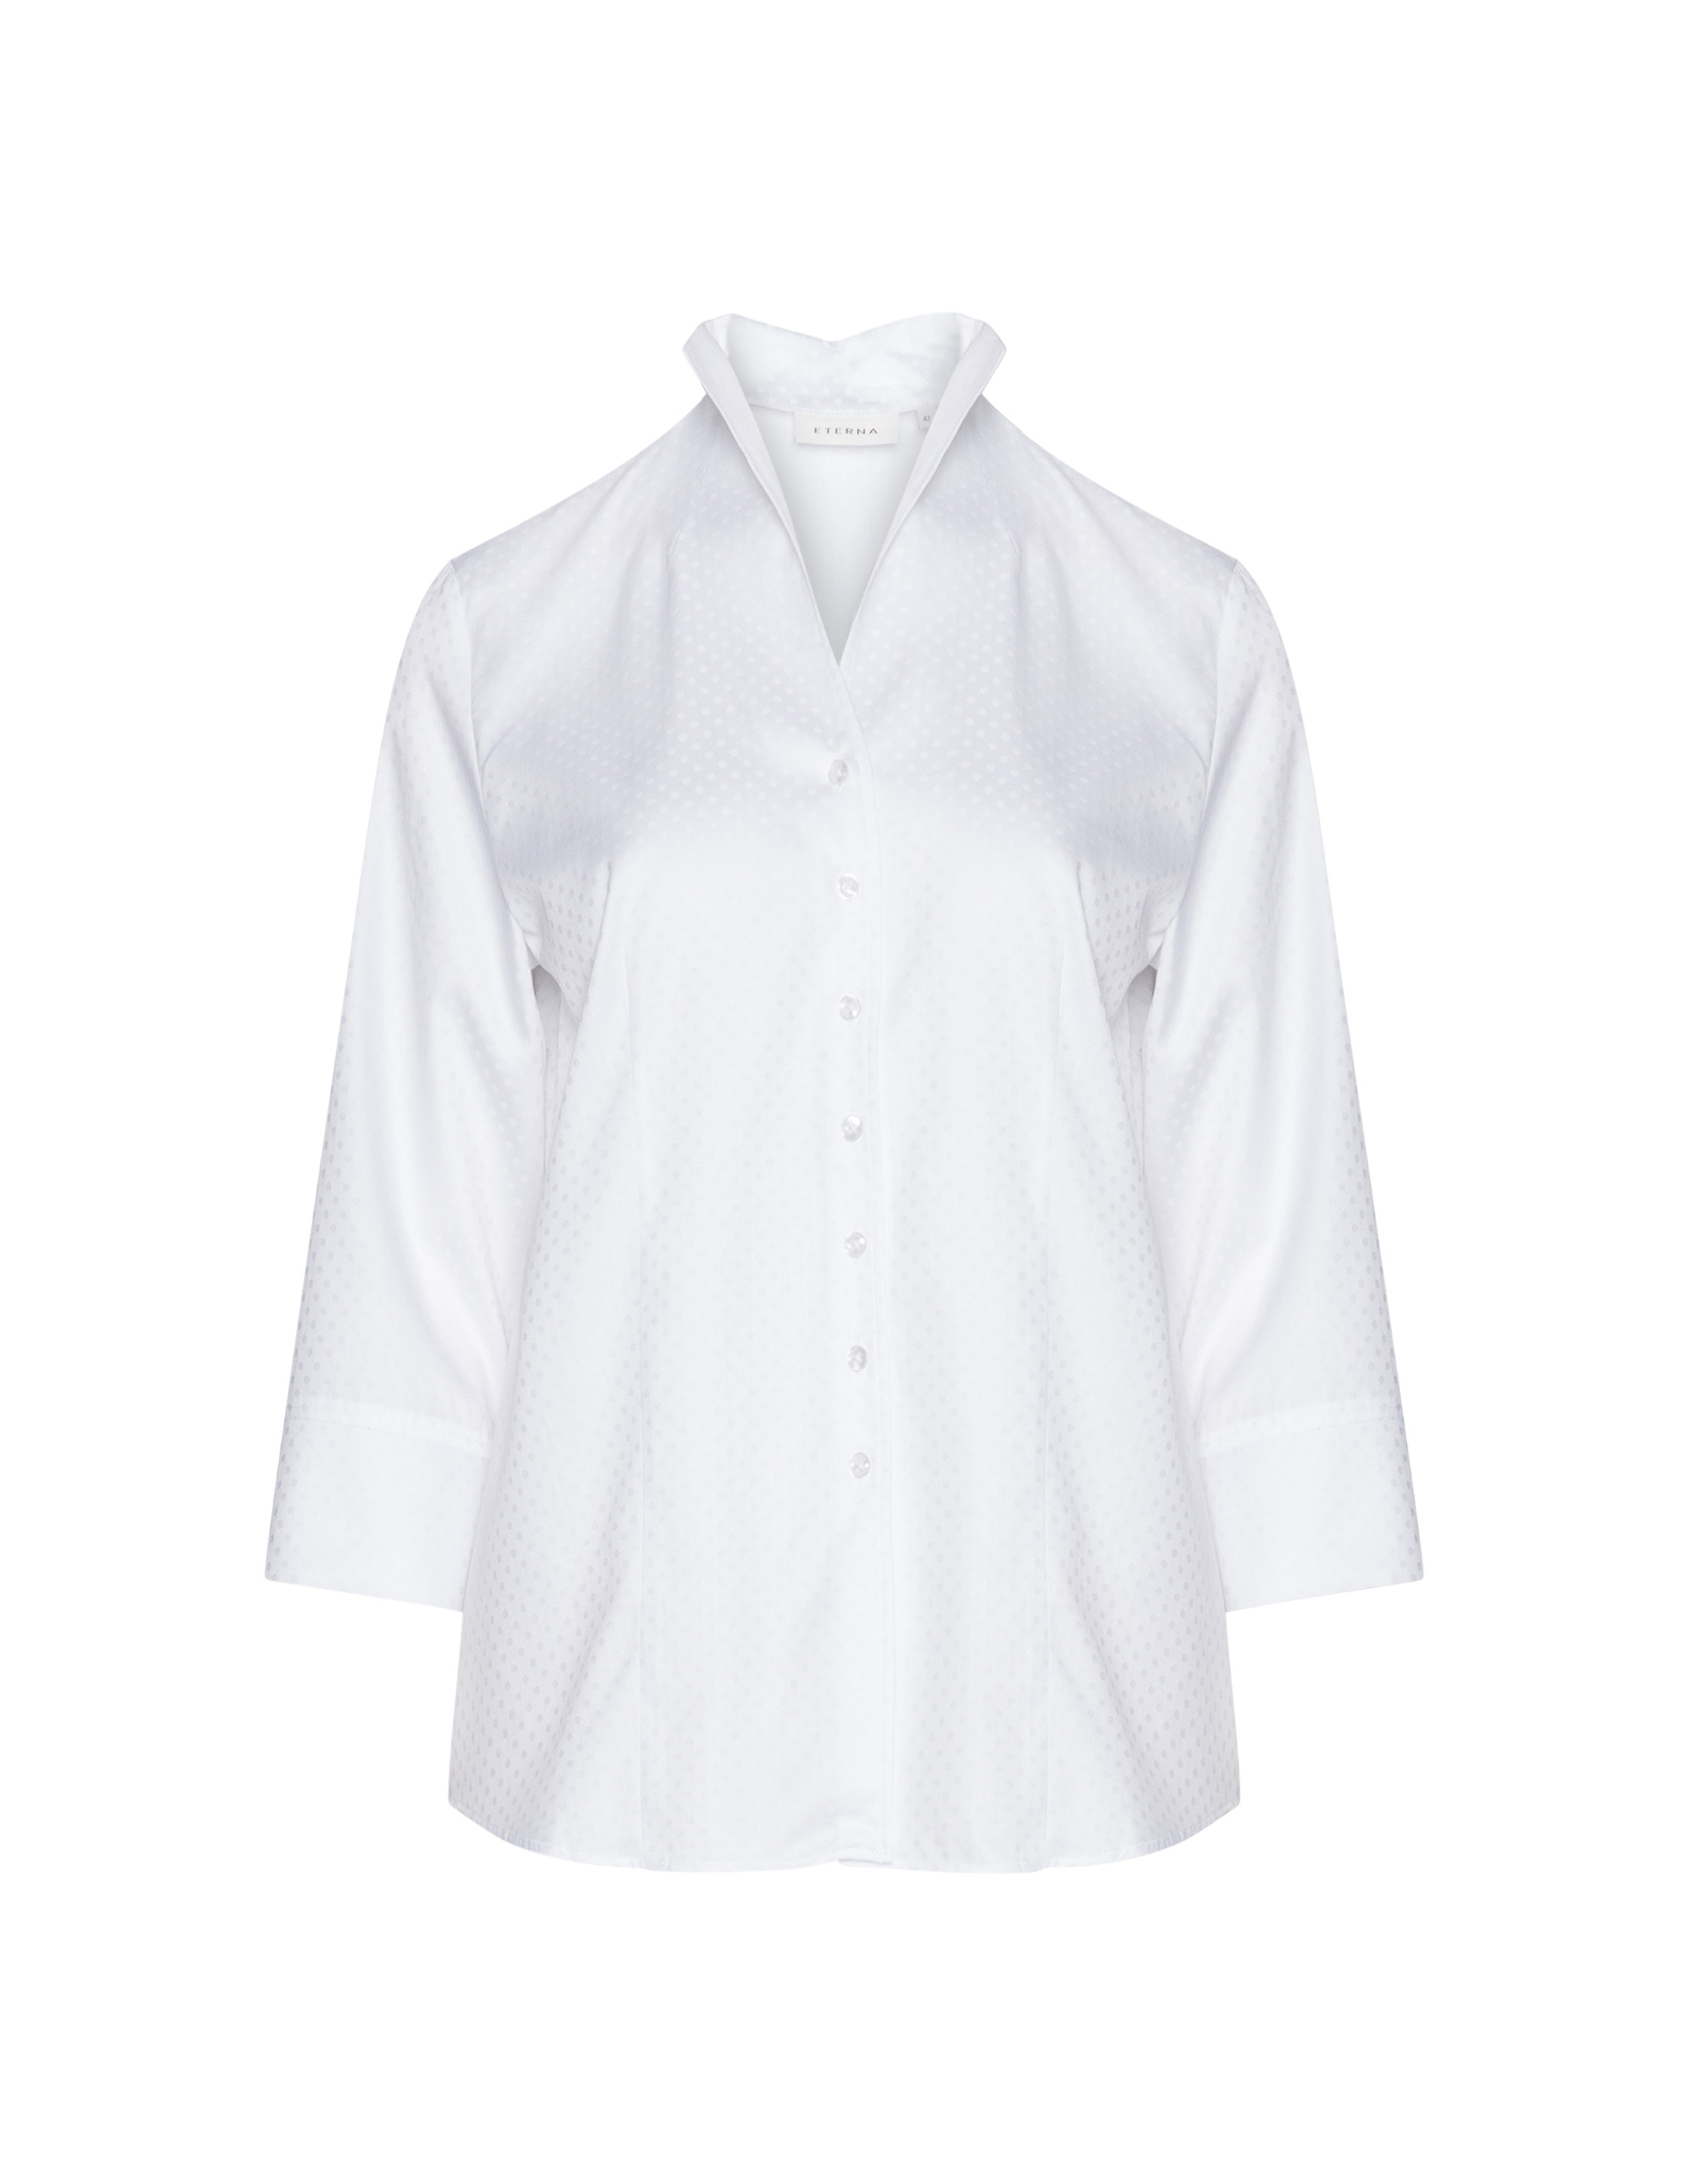 Eterna Shirts & Blouses - Buy Plus Size Fashion from navabi